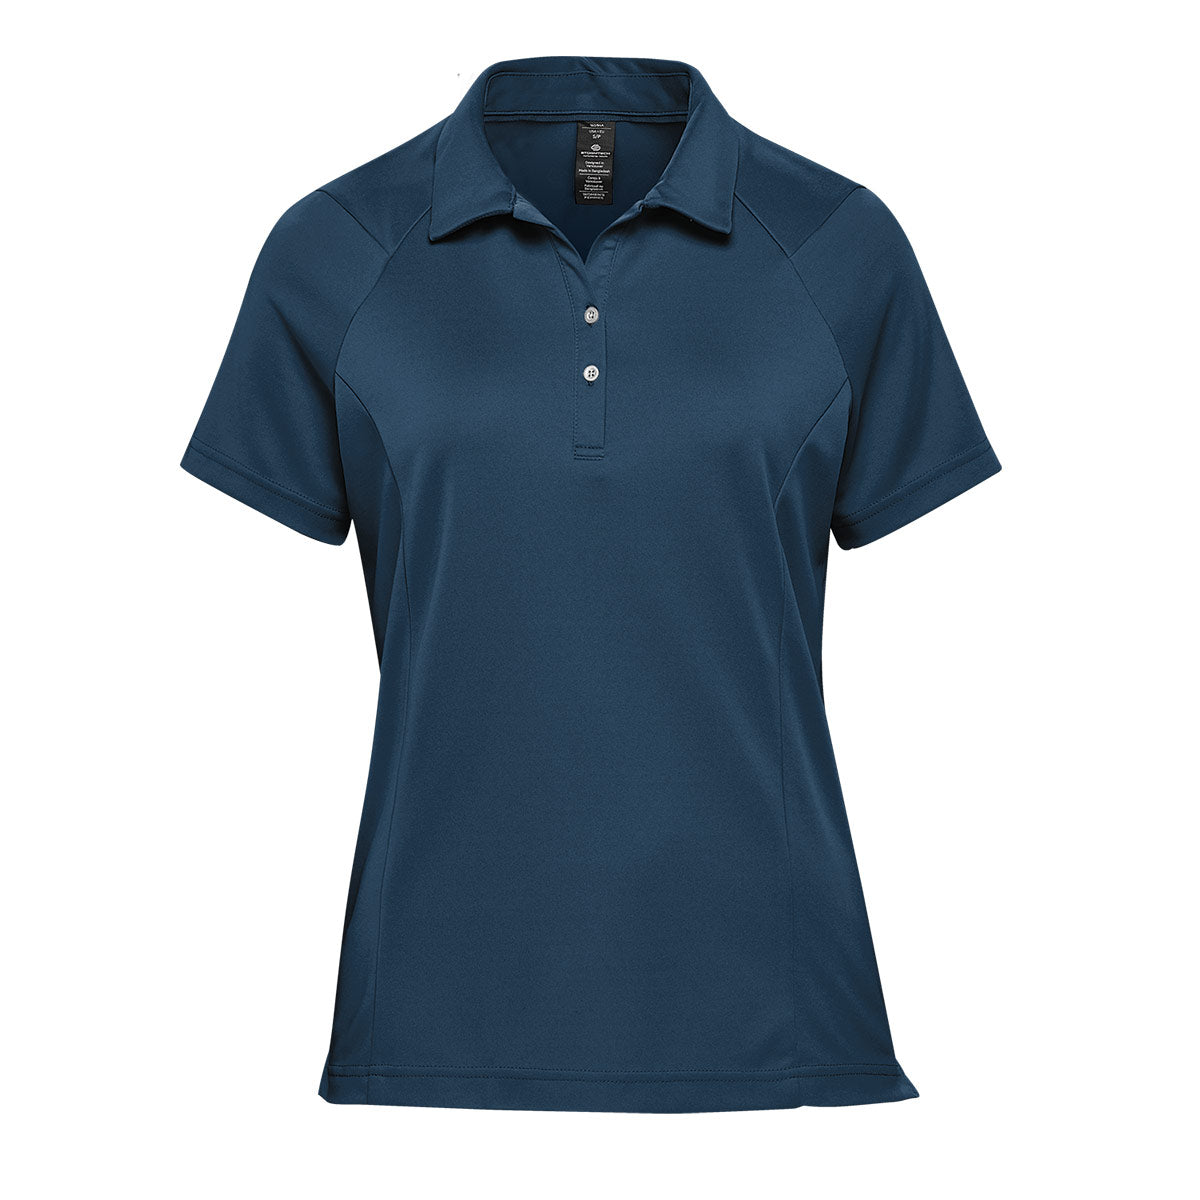 Buy Women's UPF 50+ Sports Polo Shirts